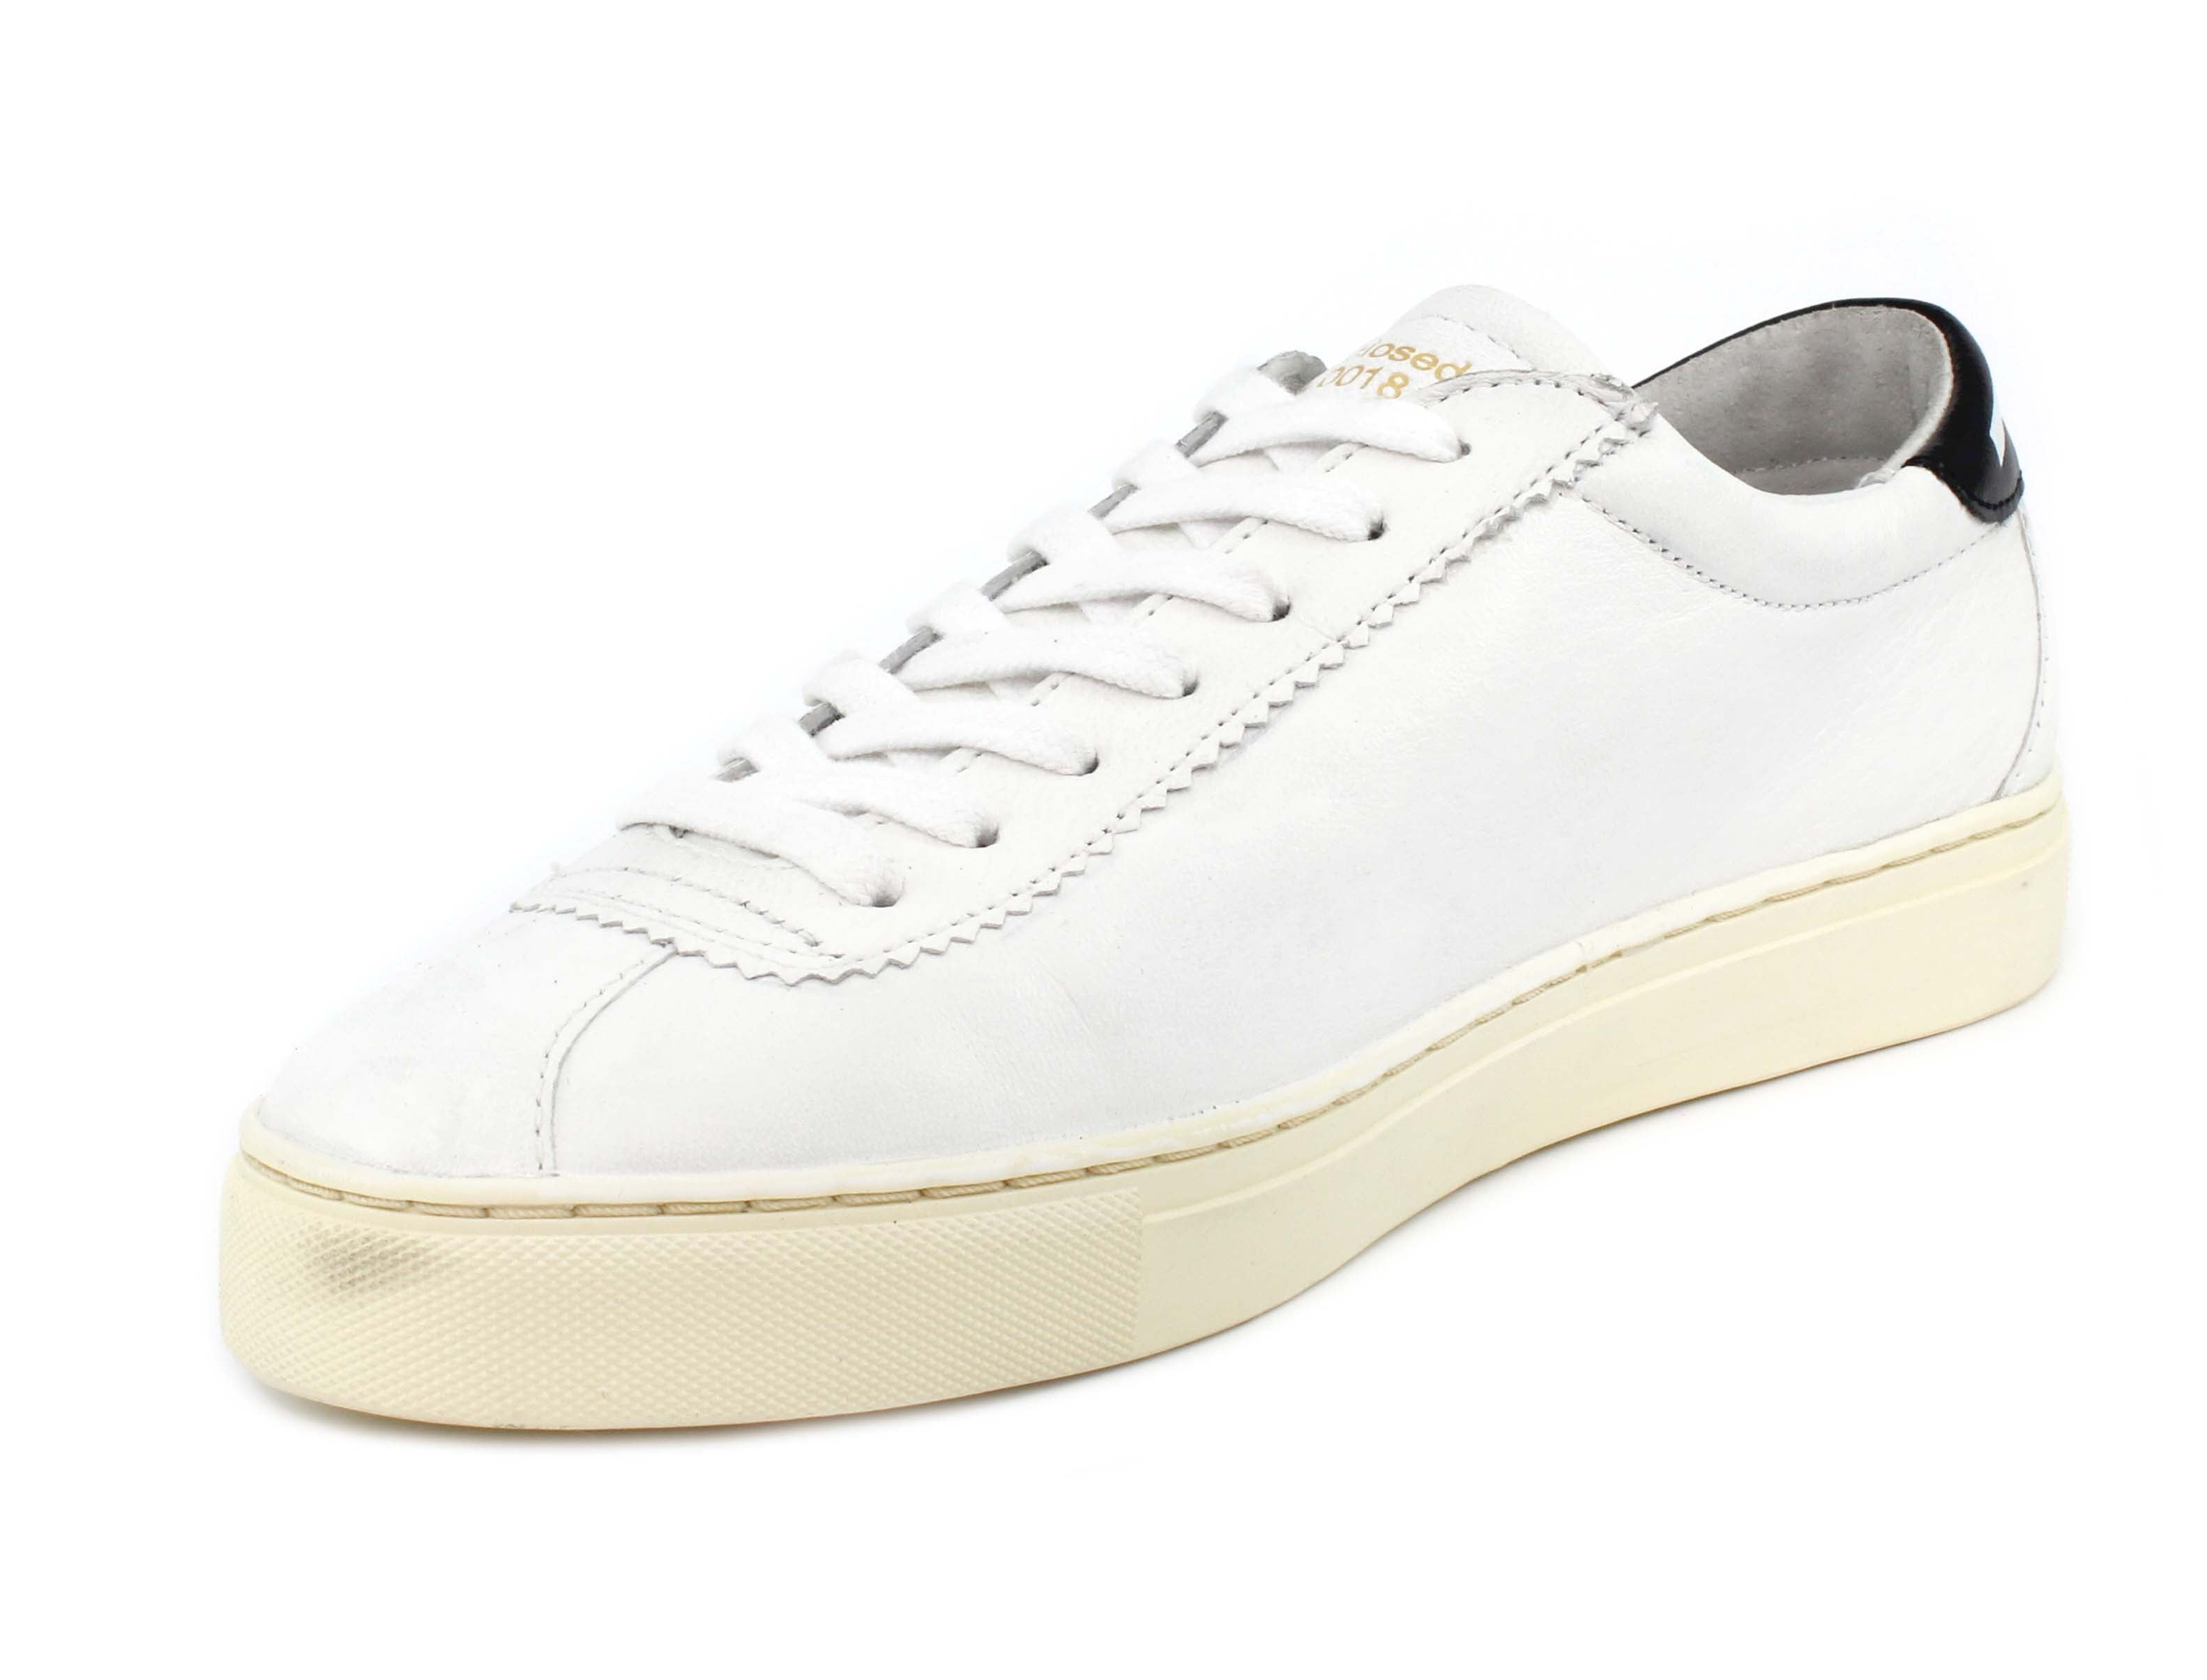 Sneaker PROJECT 01  P1LW  GG01 : WHITE BLACK - /PANNA